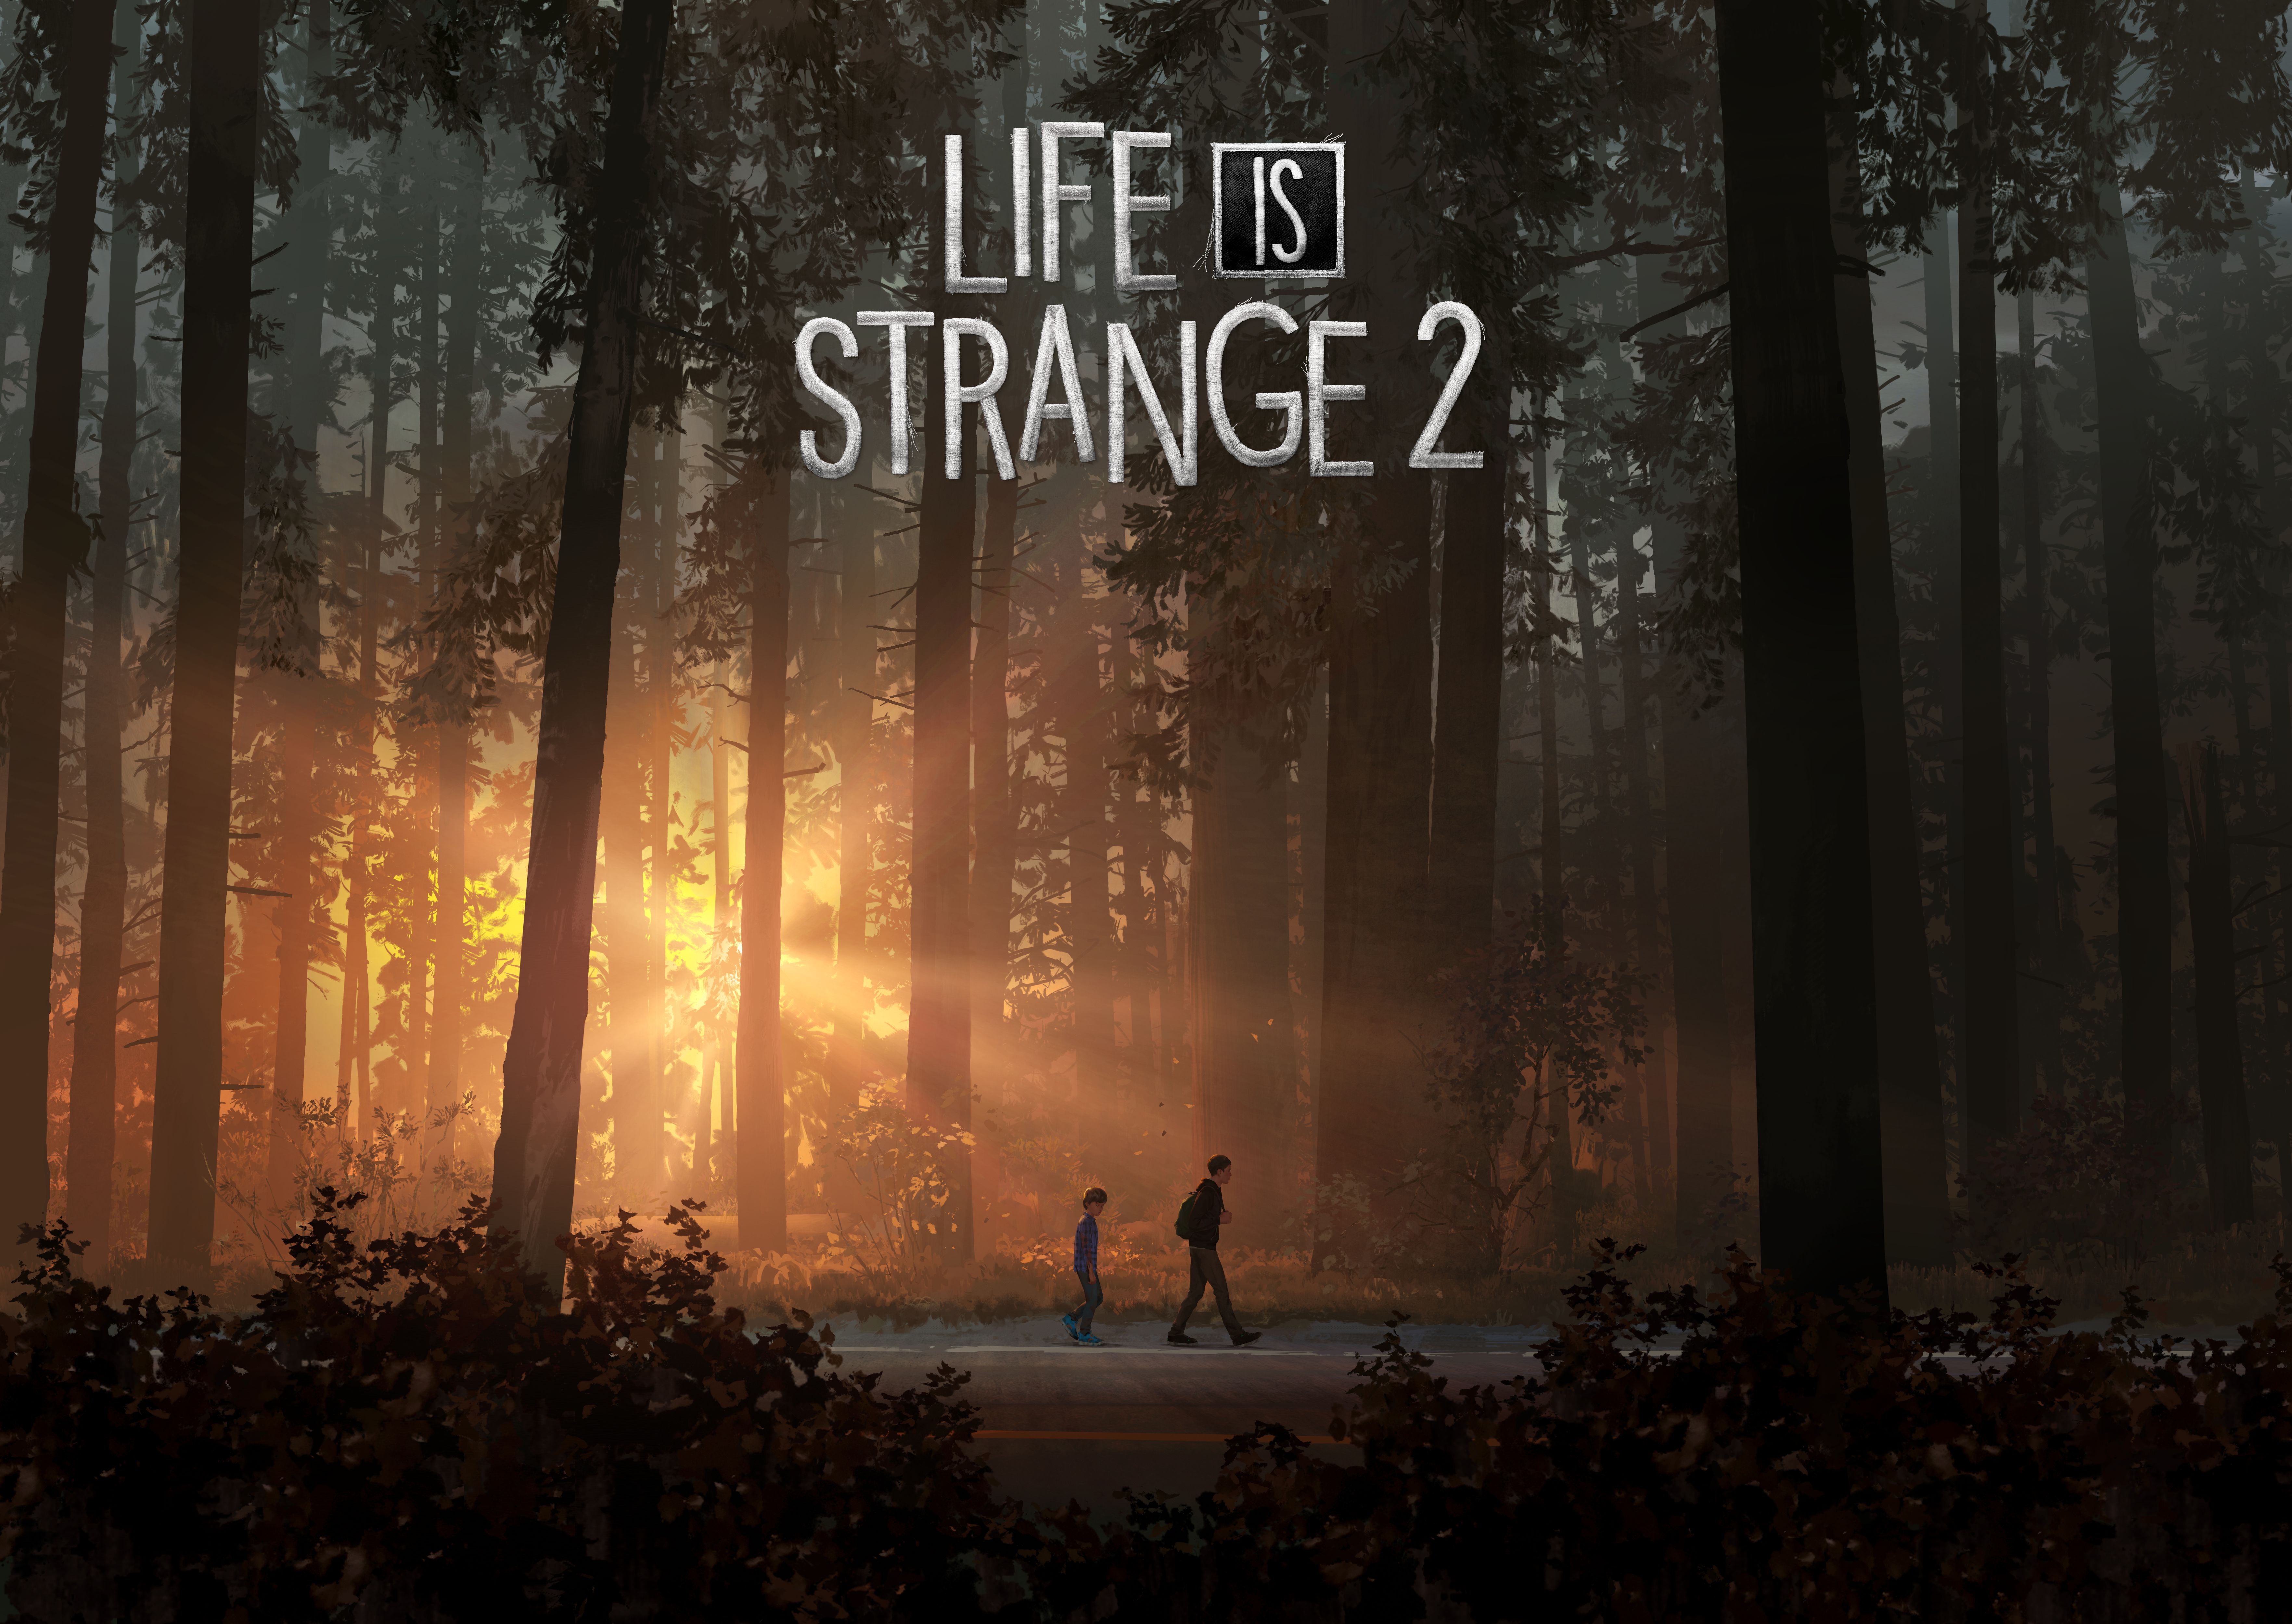 Life is Strange: True Colors Wavelengths DLC impressions - Polygon